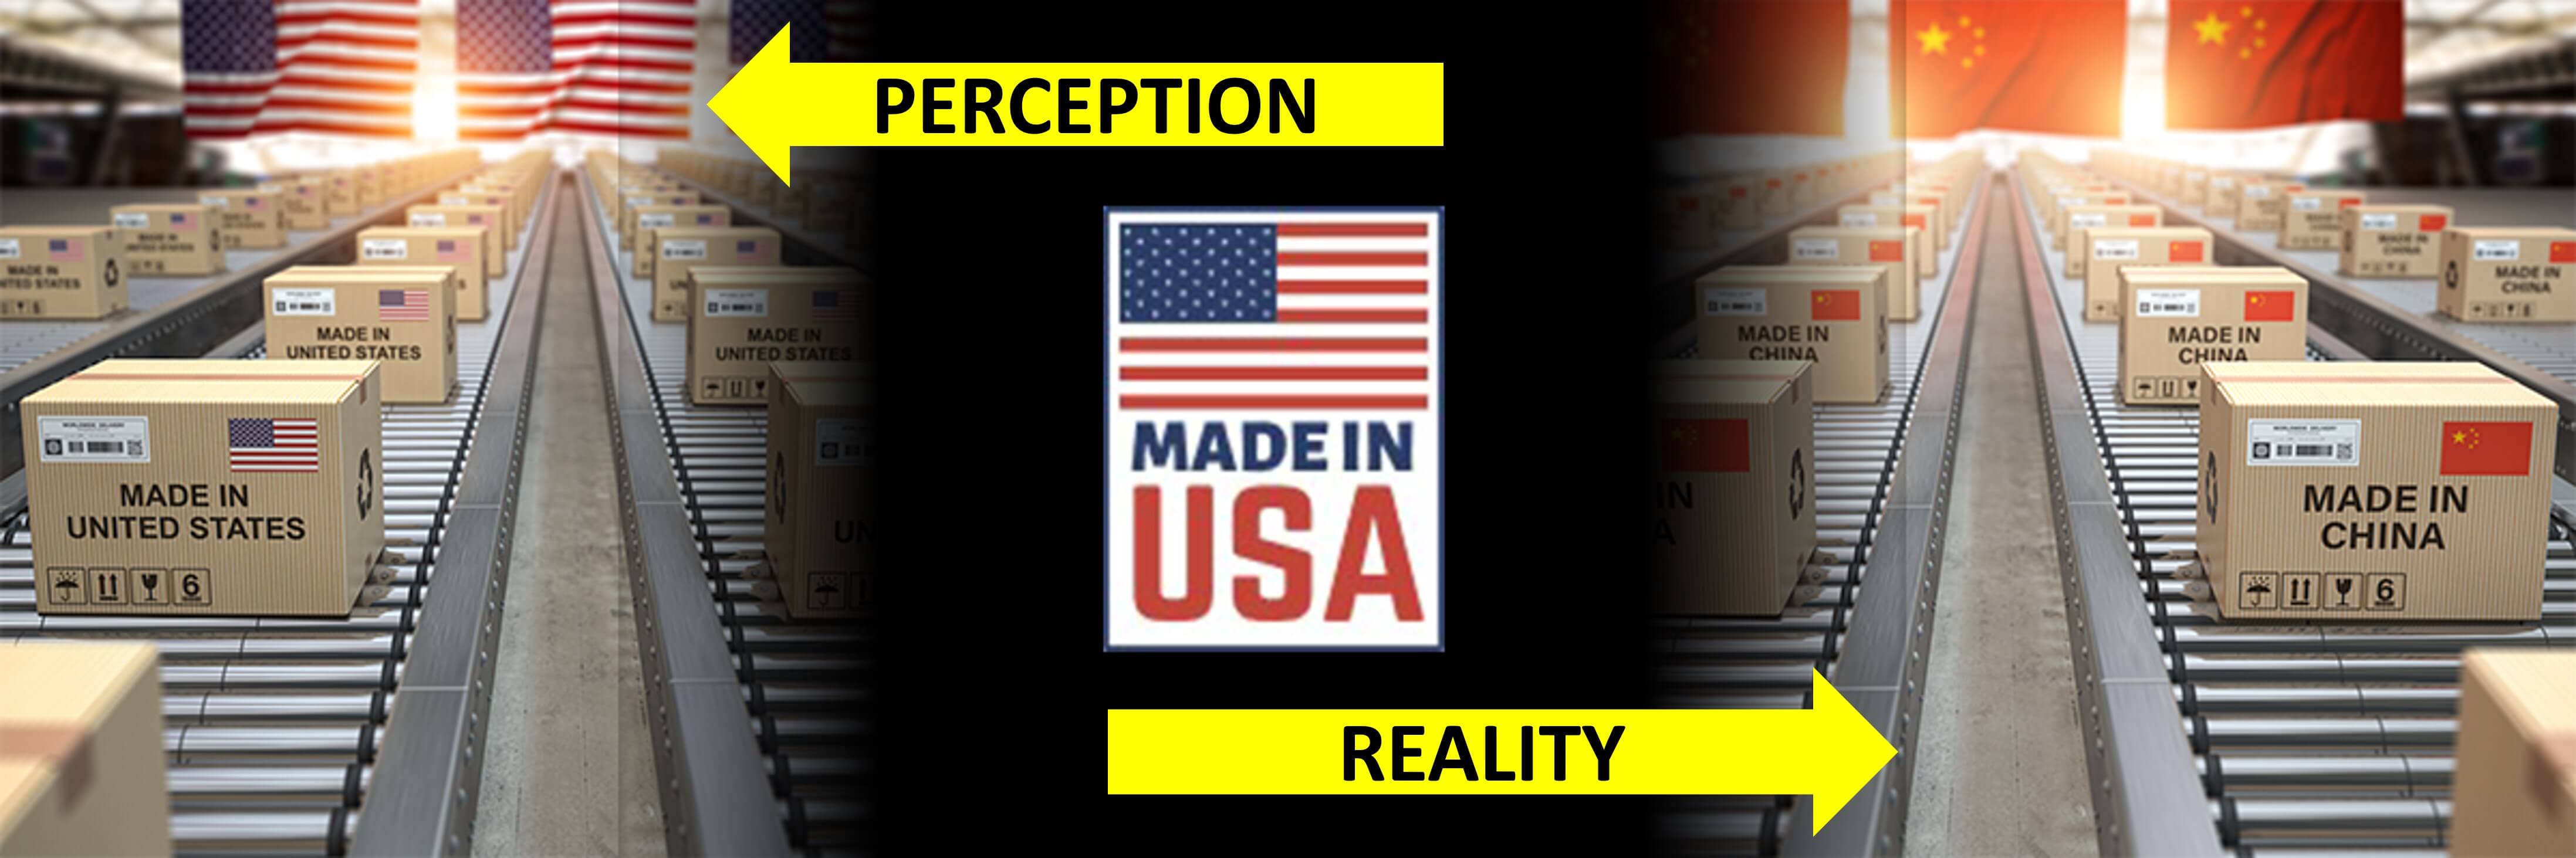 c-scrm perception vs reality